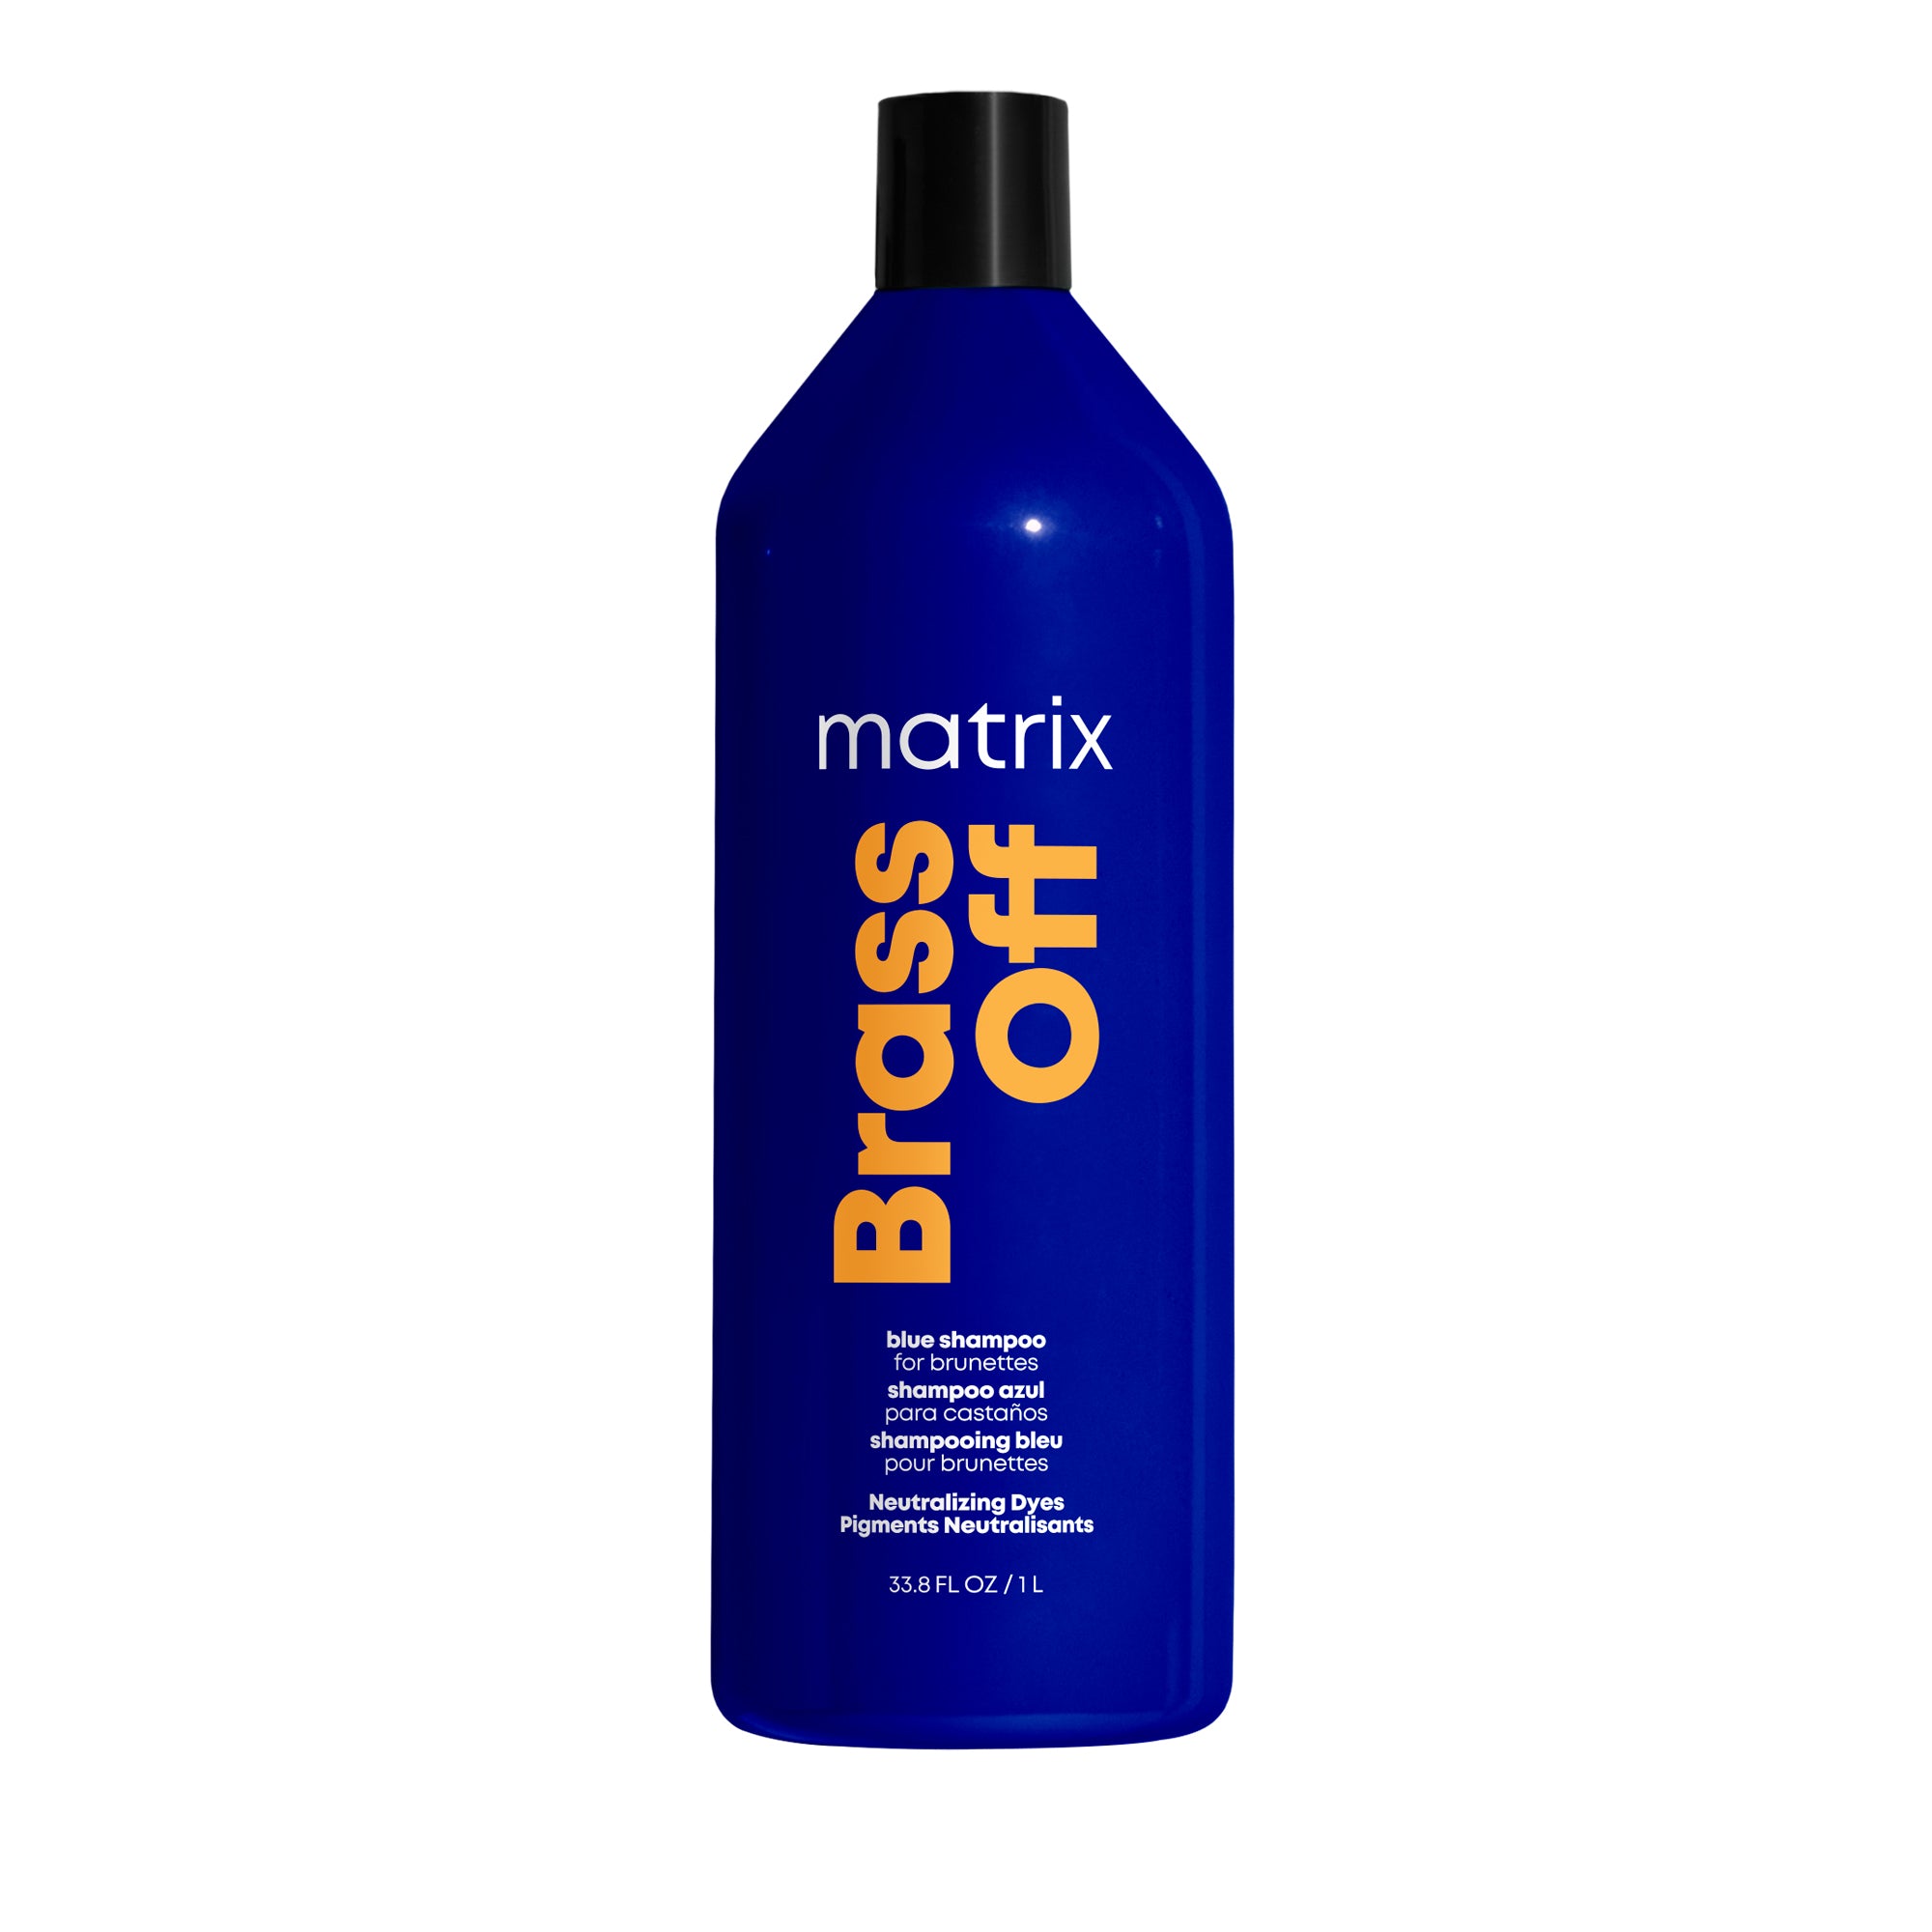 Matrix Brass Off Shampoo and Conditioner Duo 33oz ($80 Value) / 33.OZ